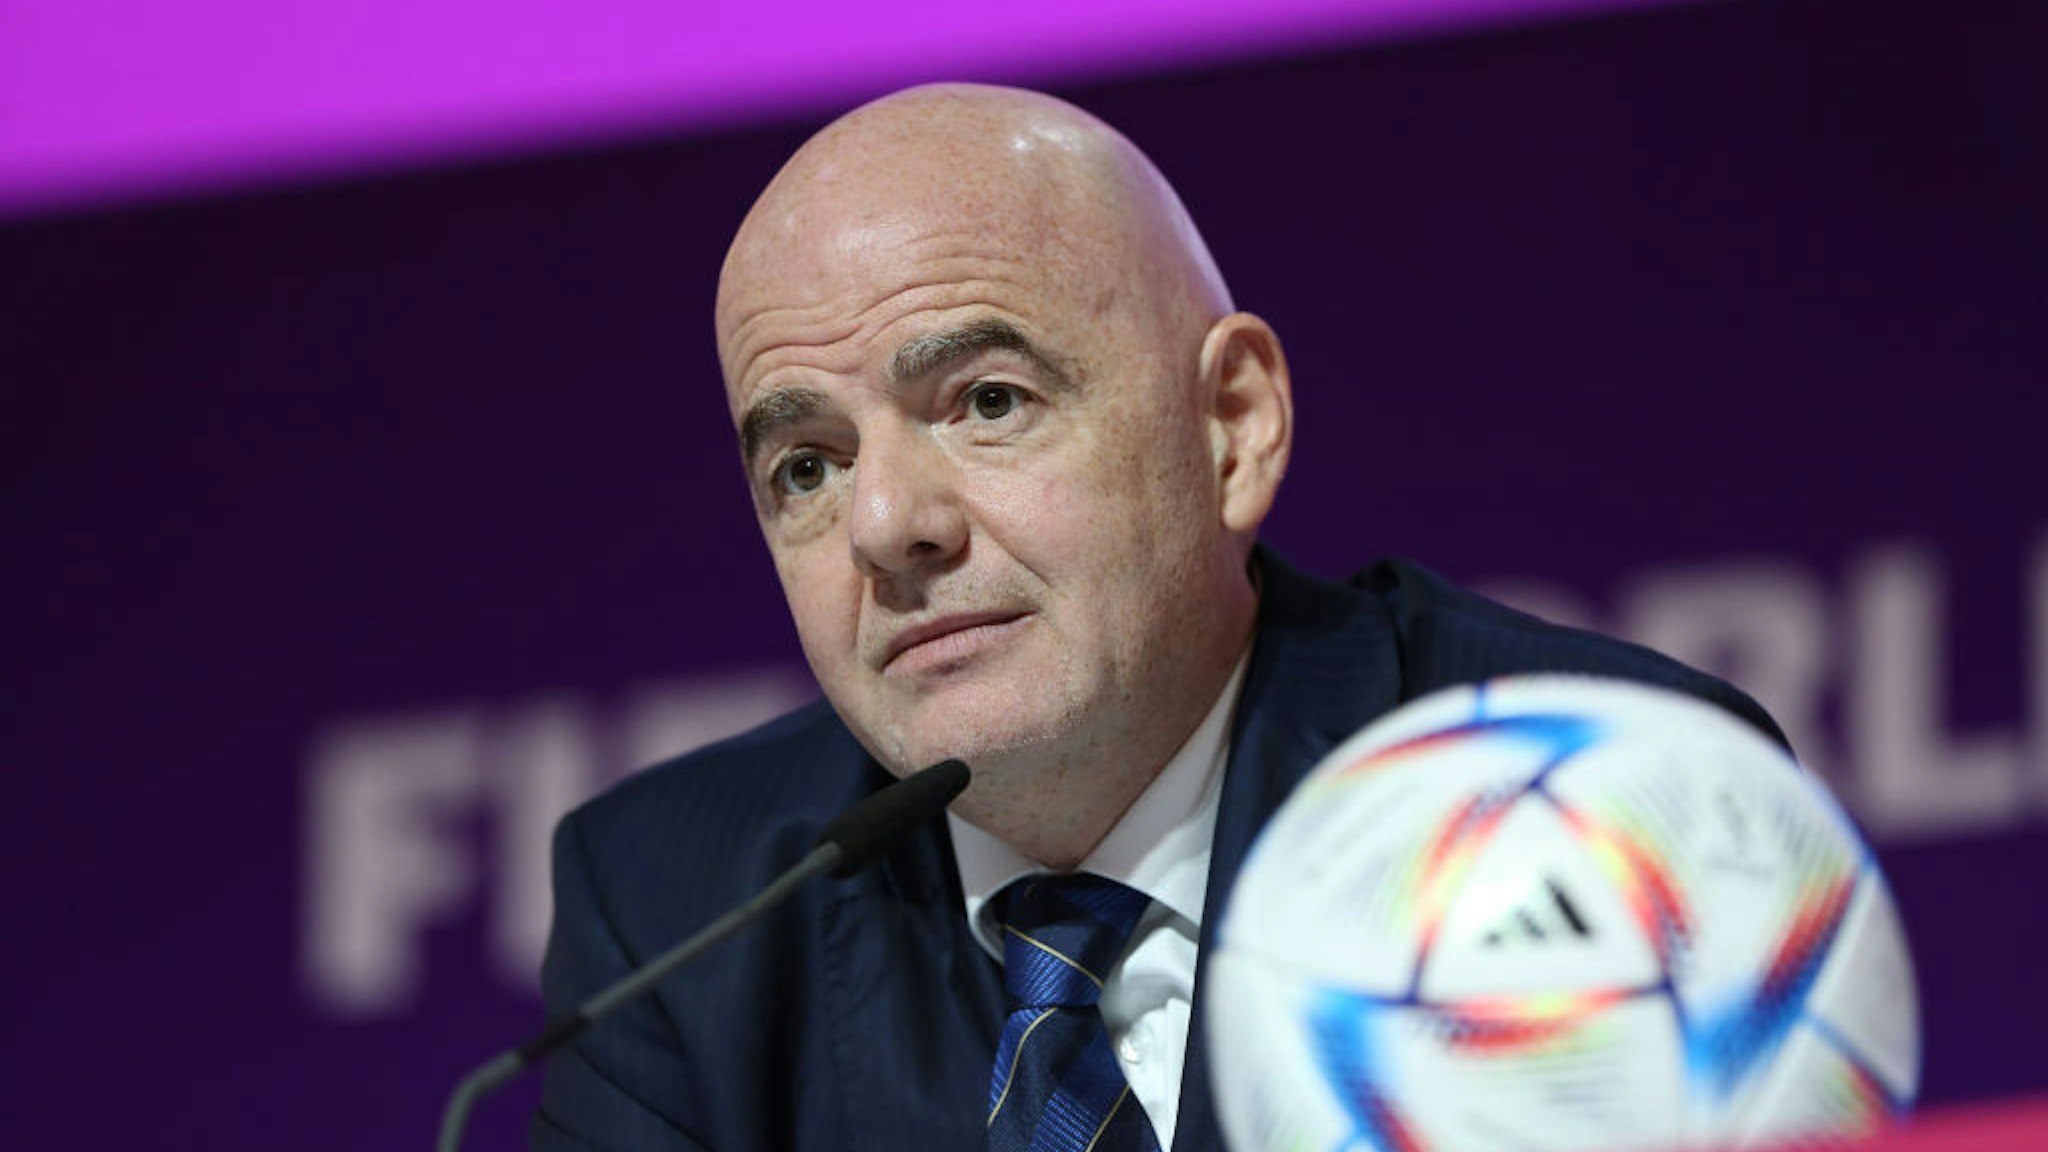 DOHA, QATAR - NOVEMBER 19: FIFA President, Gianni Infantino speaks during a press conference ahead of the FIFA World Cup Qatar 2022 tournament on November 19, 2022 in Doha, Qatar.